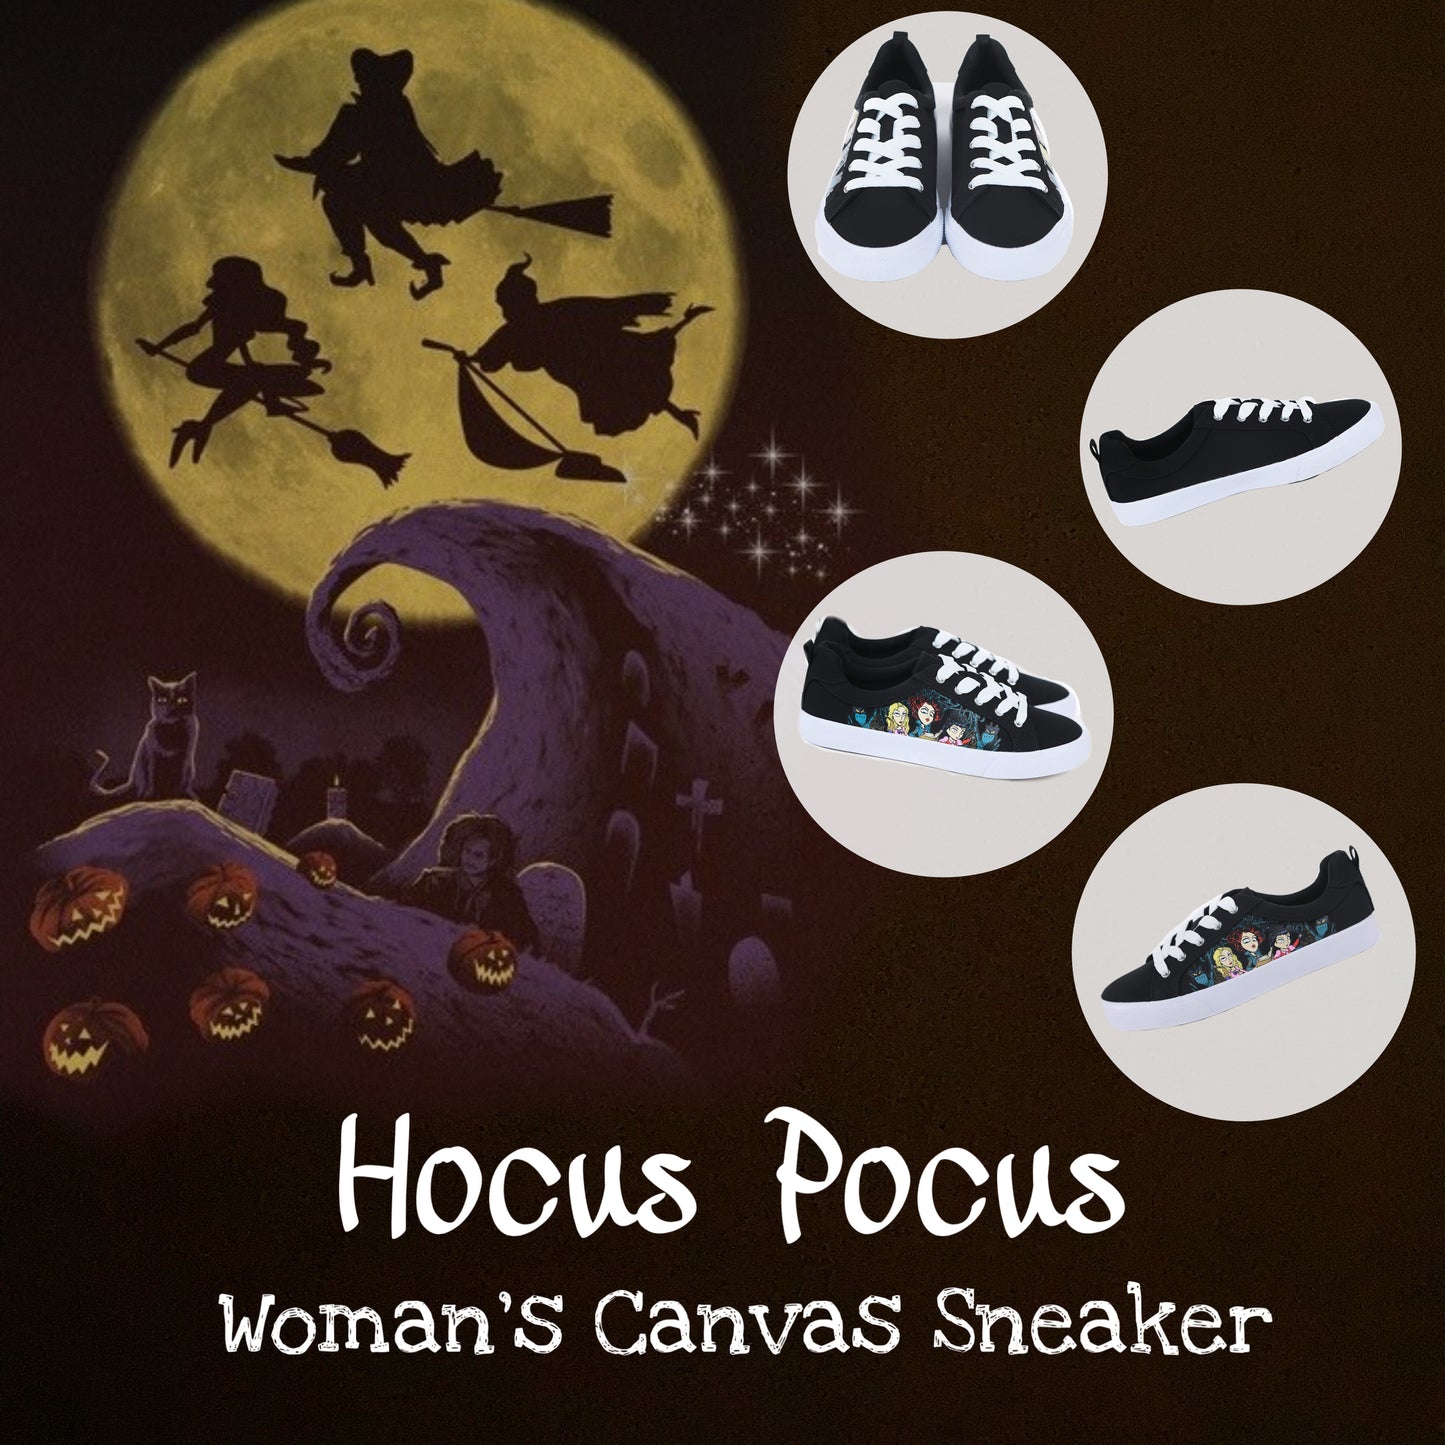 Disney Hocus Pocus Woman's Canvas Sneaker